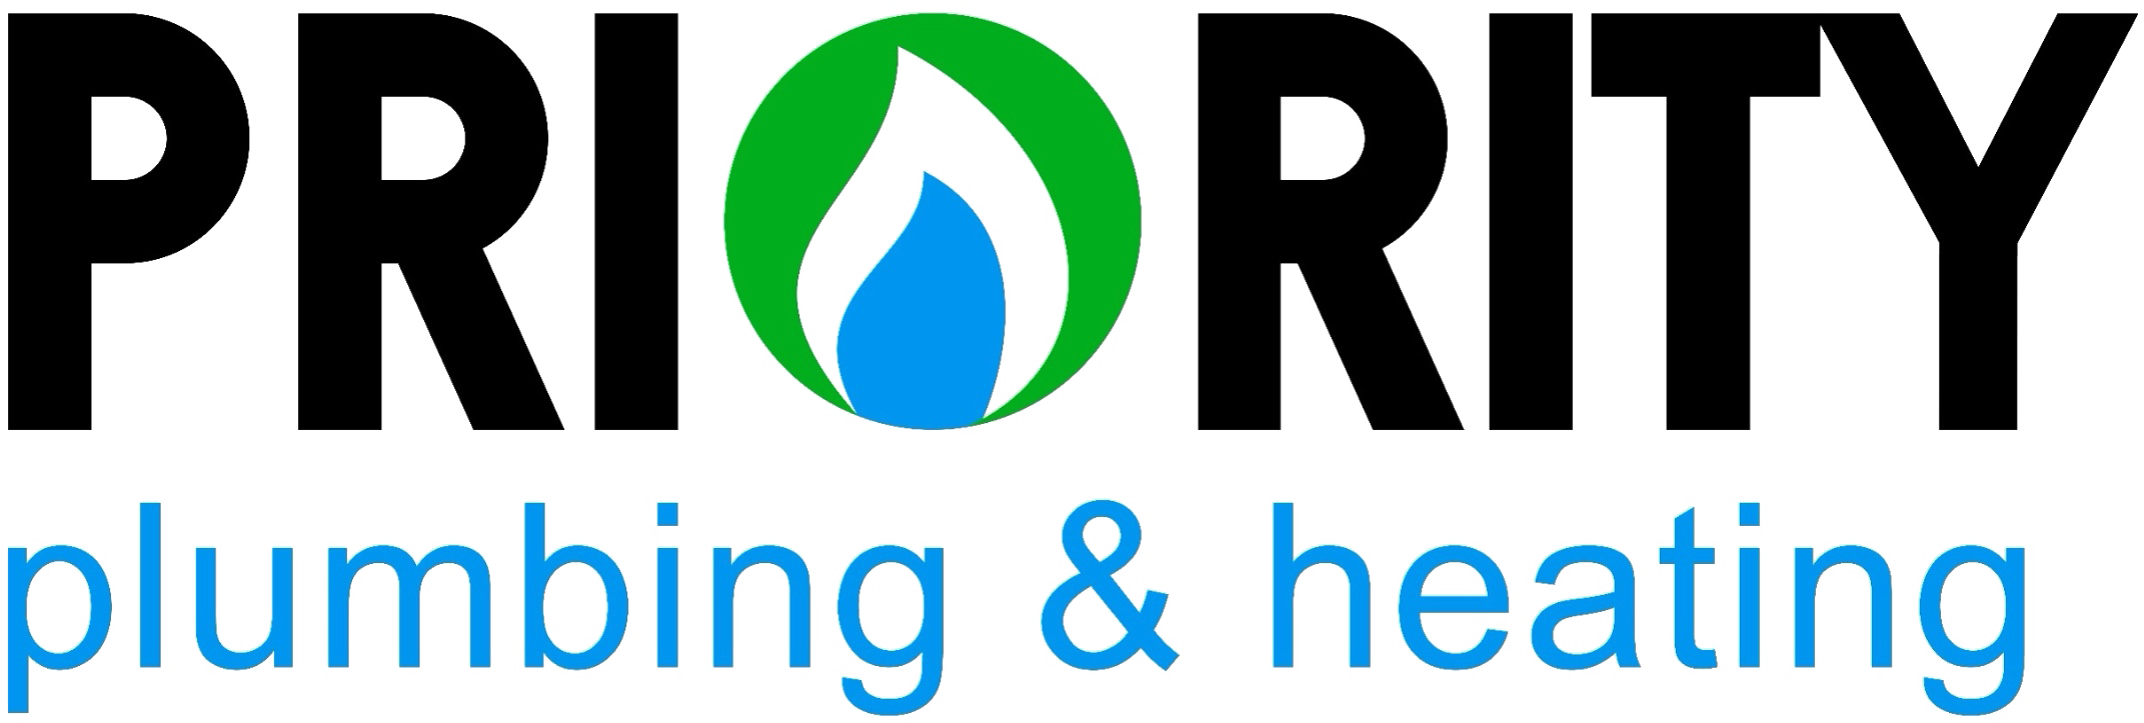 Plumbing and heating specialists in Berkshire